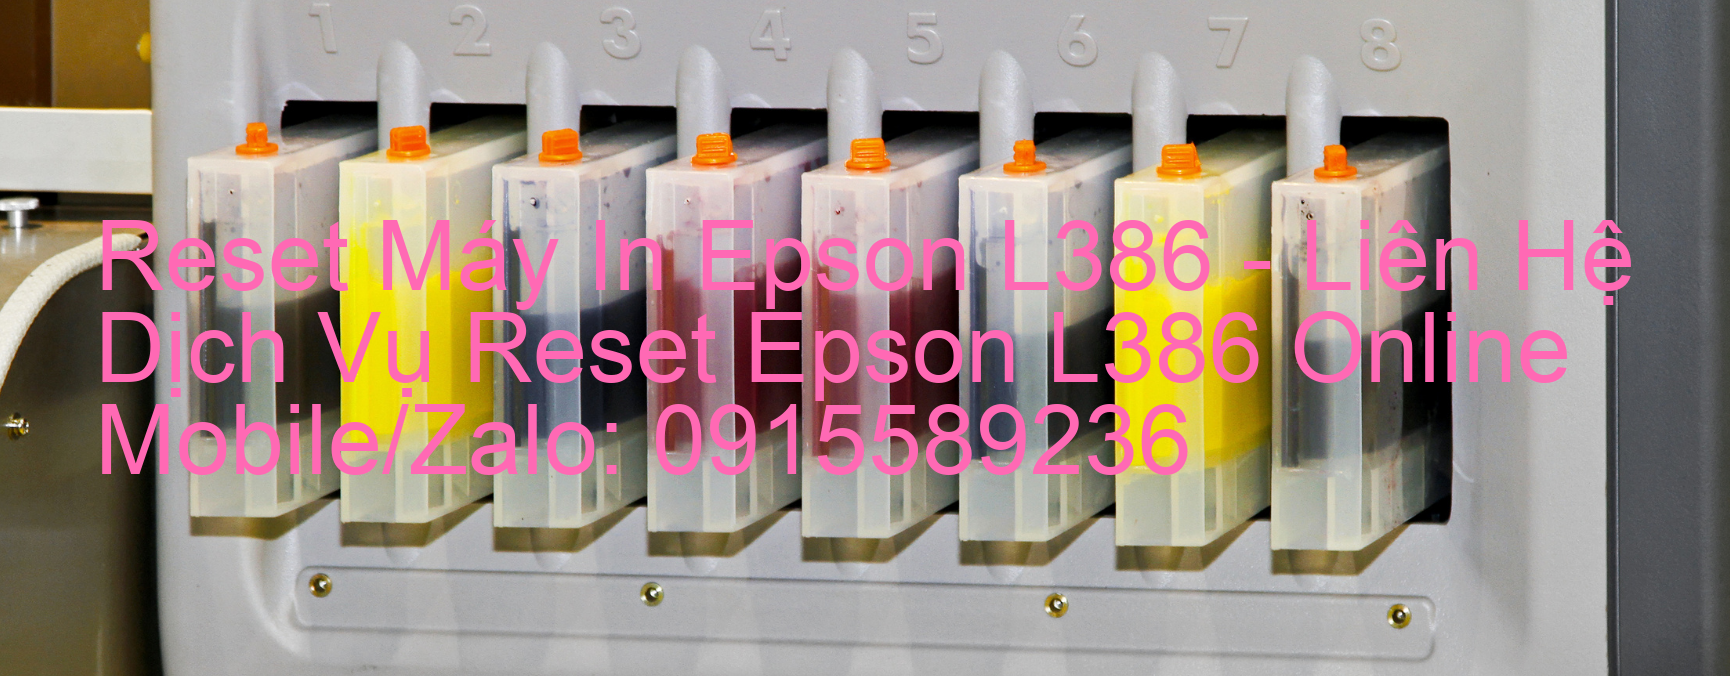 Reset Máy In Epson L386 Online